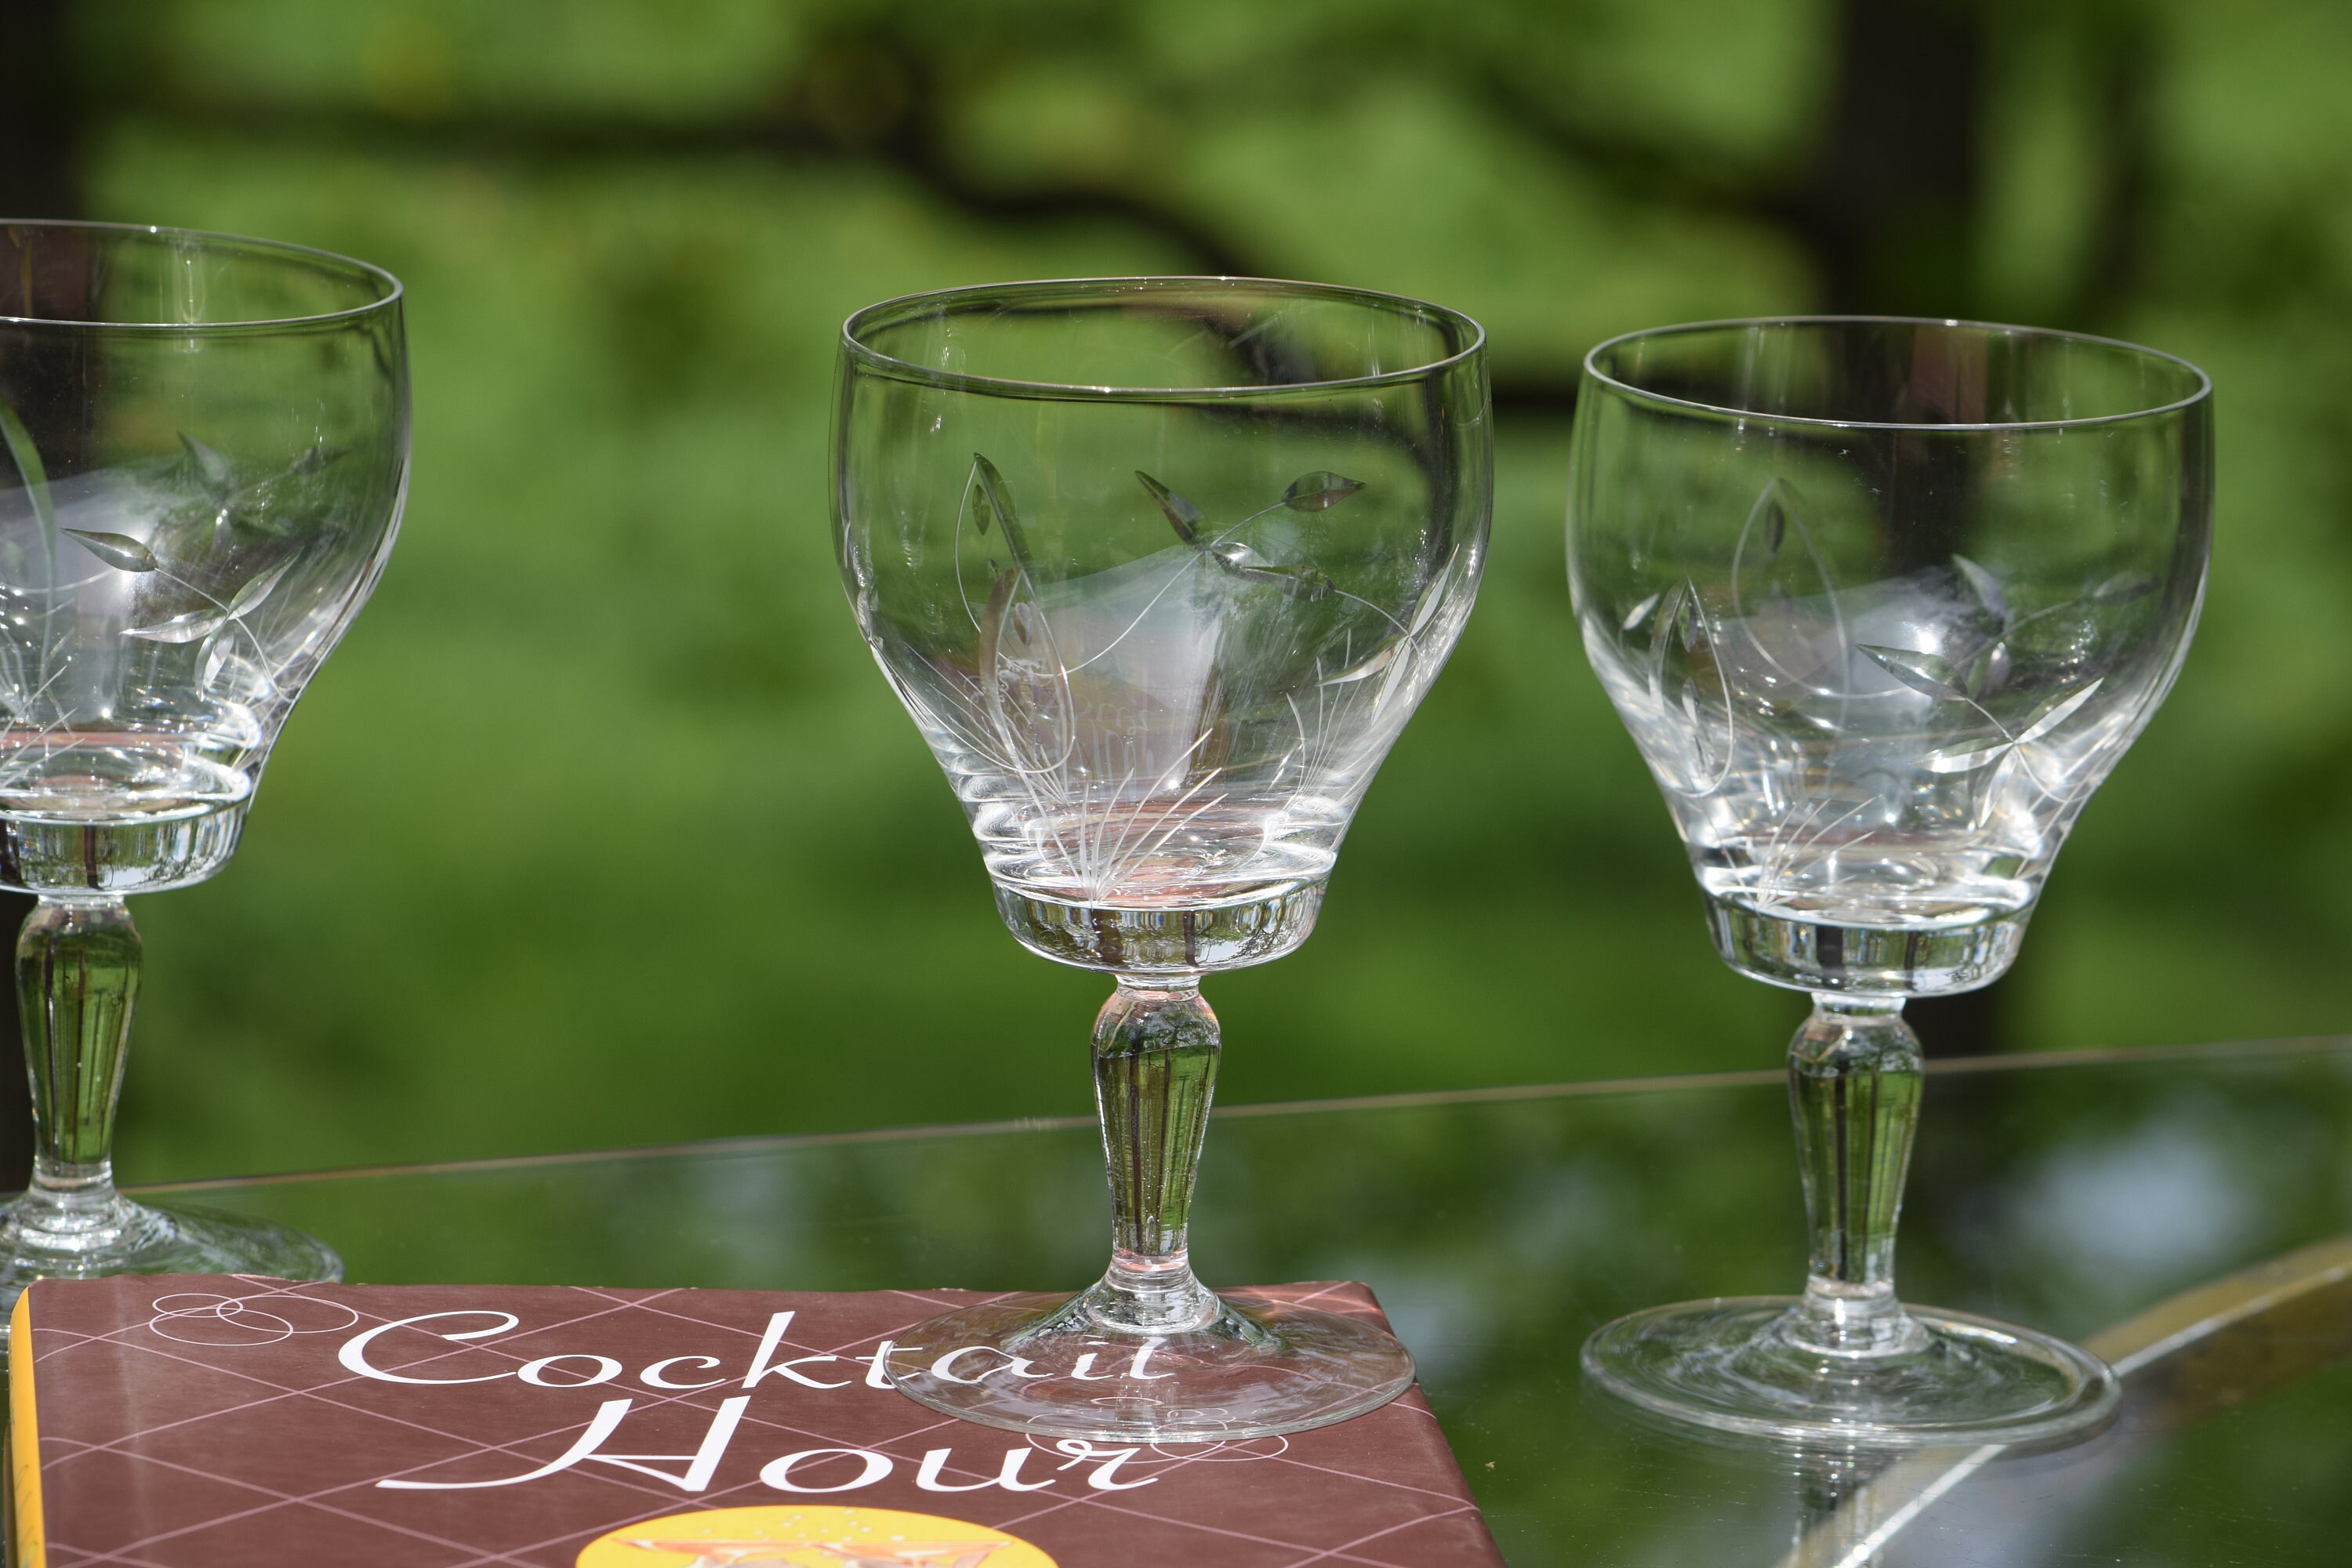 Crystal Wine Glass Set, Fancy Wine Goblets, Crystal Stemware